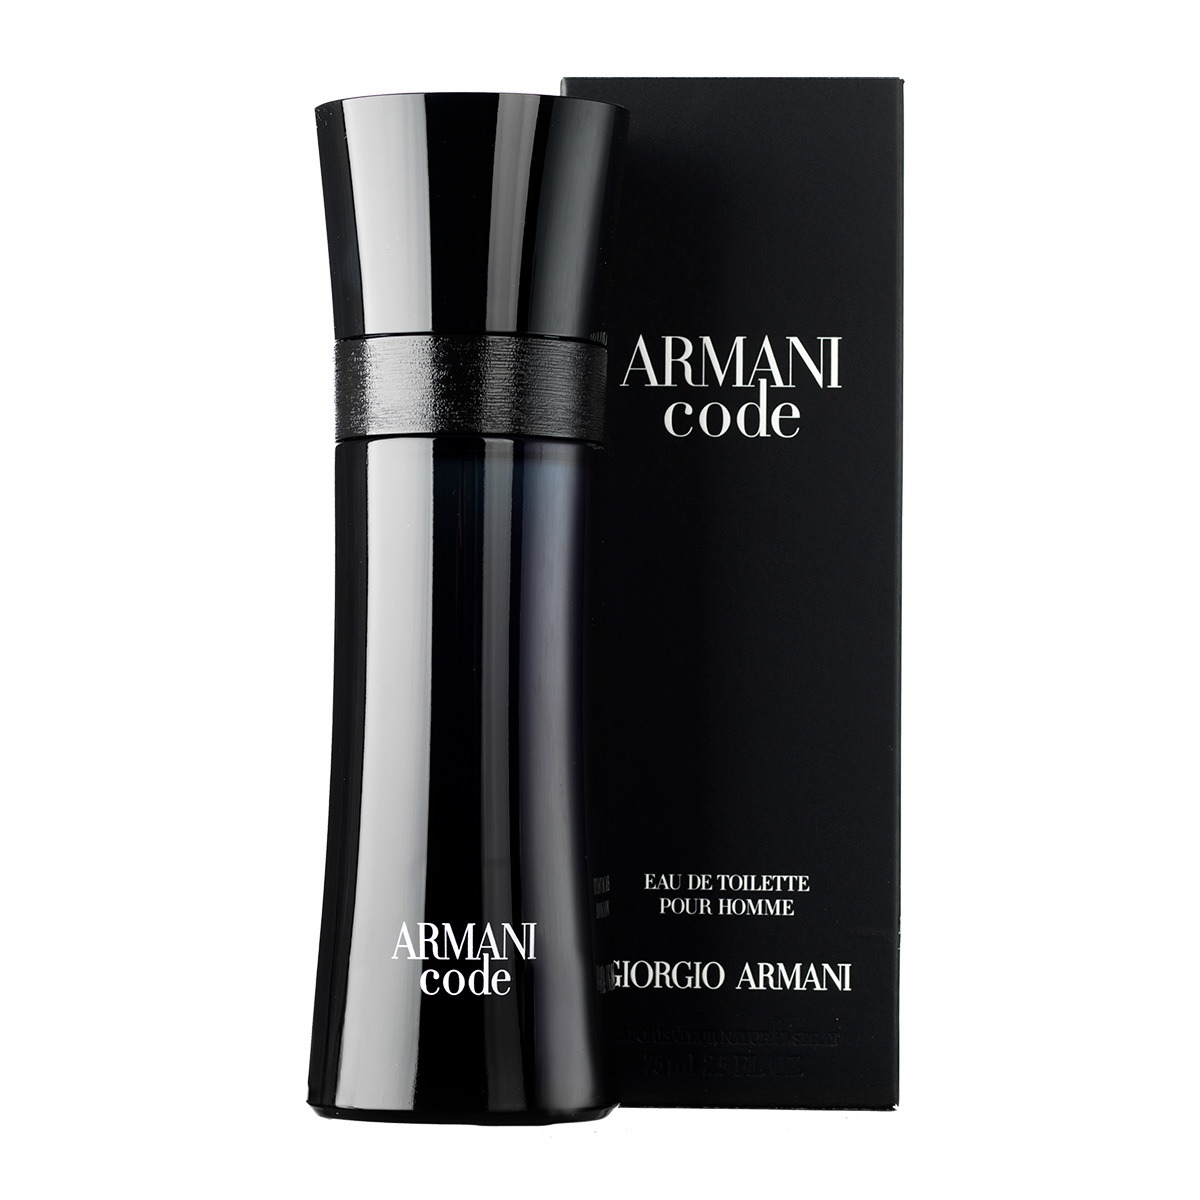 GIORGIO ARMANI CODE EDT 75 ML FOR MEN - Perfume Bangladesh